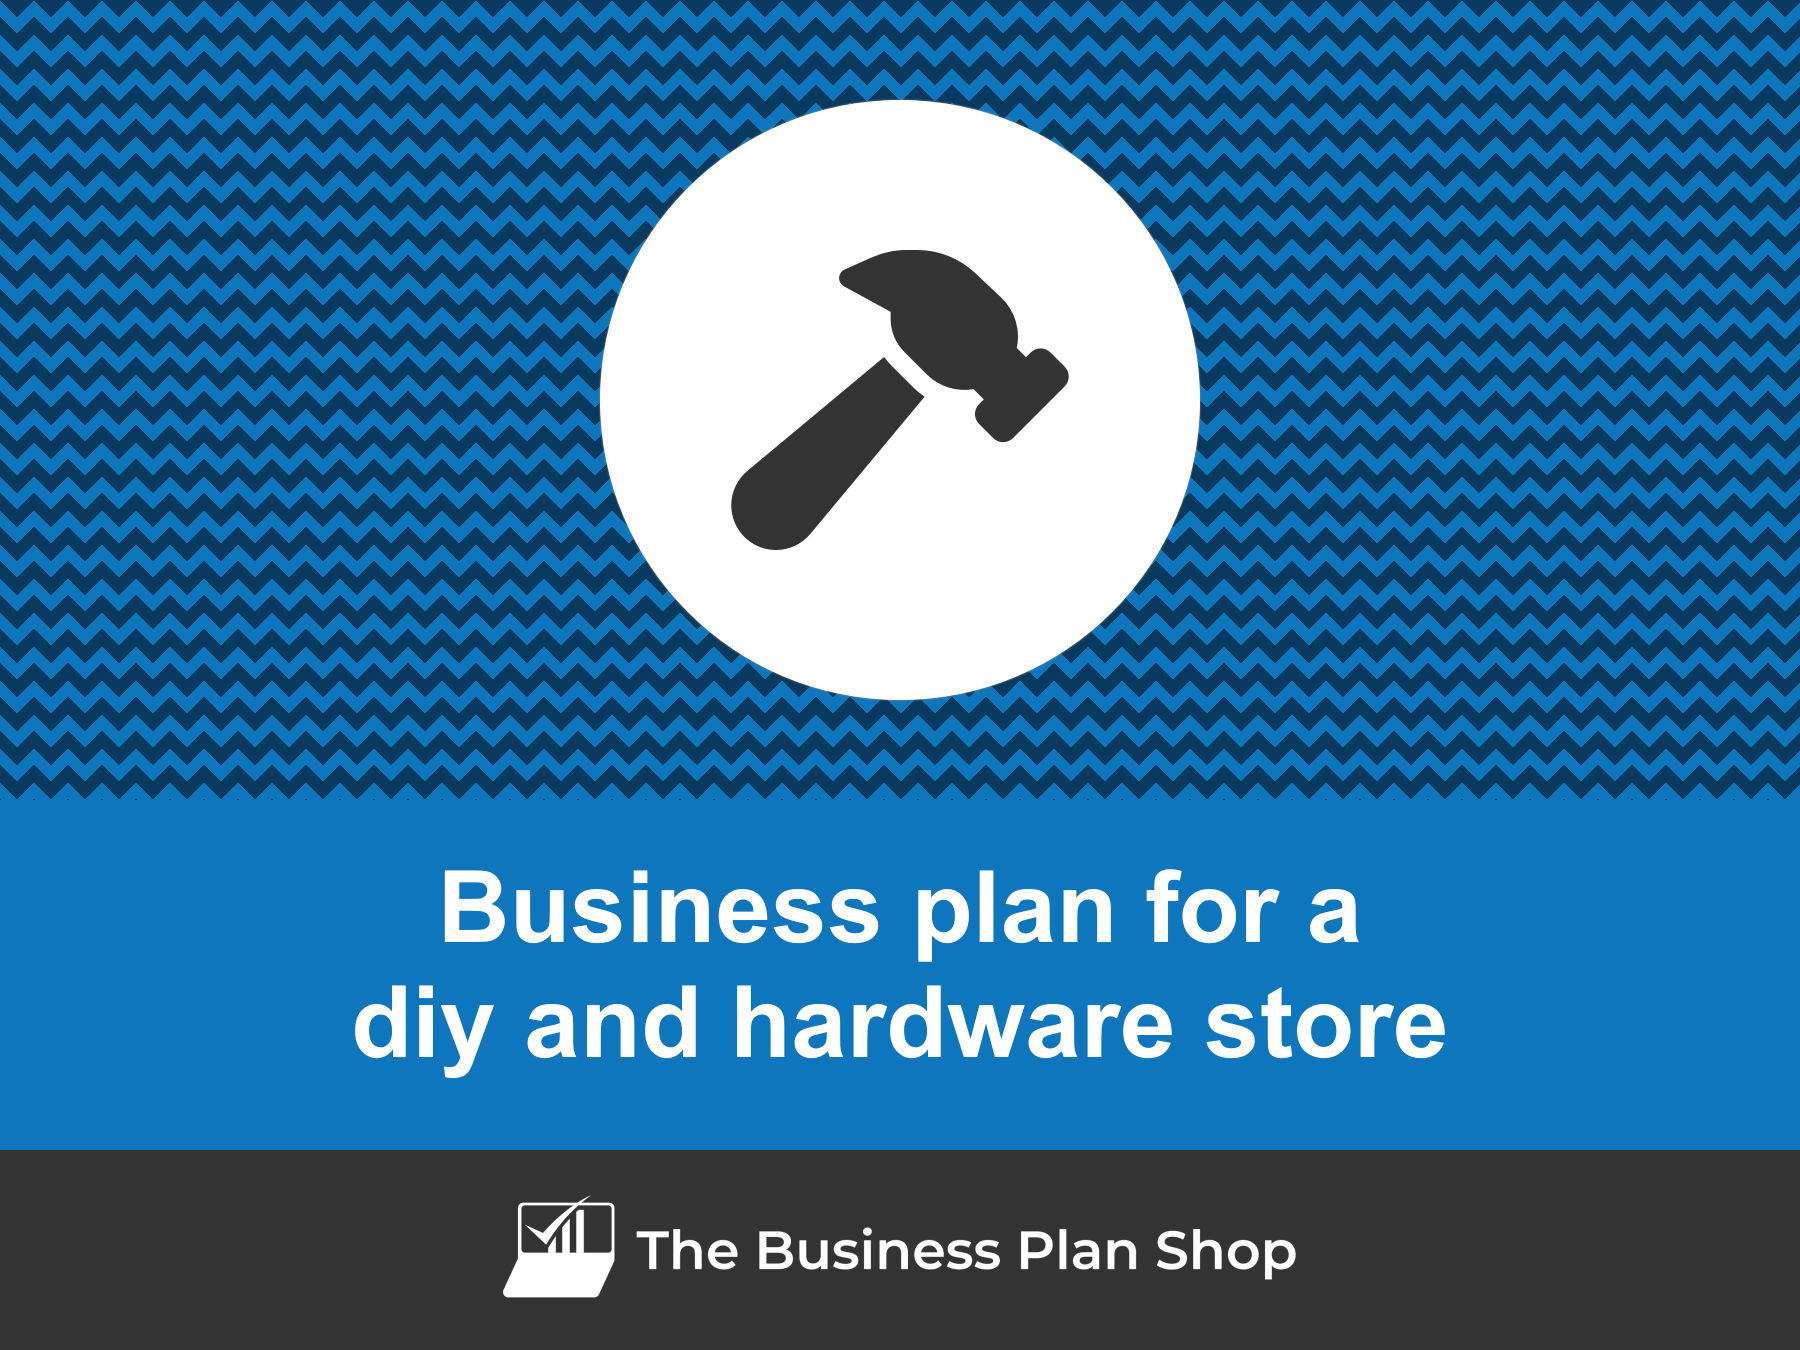 hardware store business plan